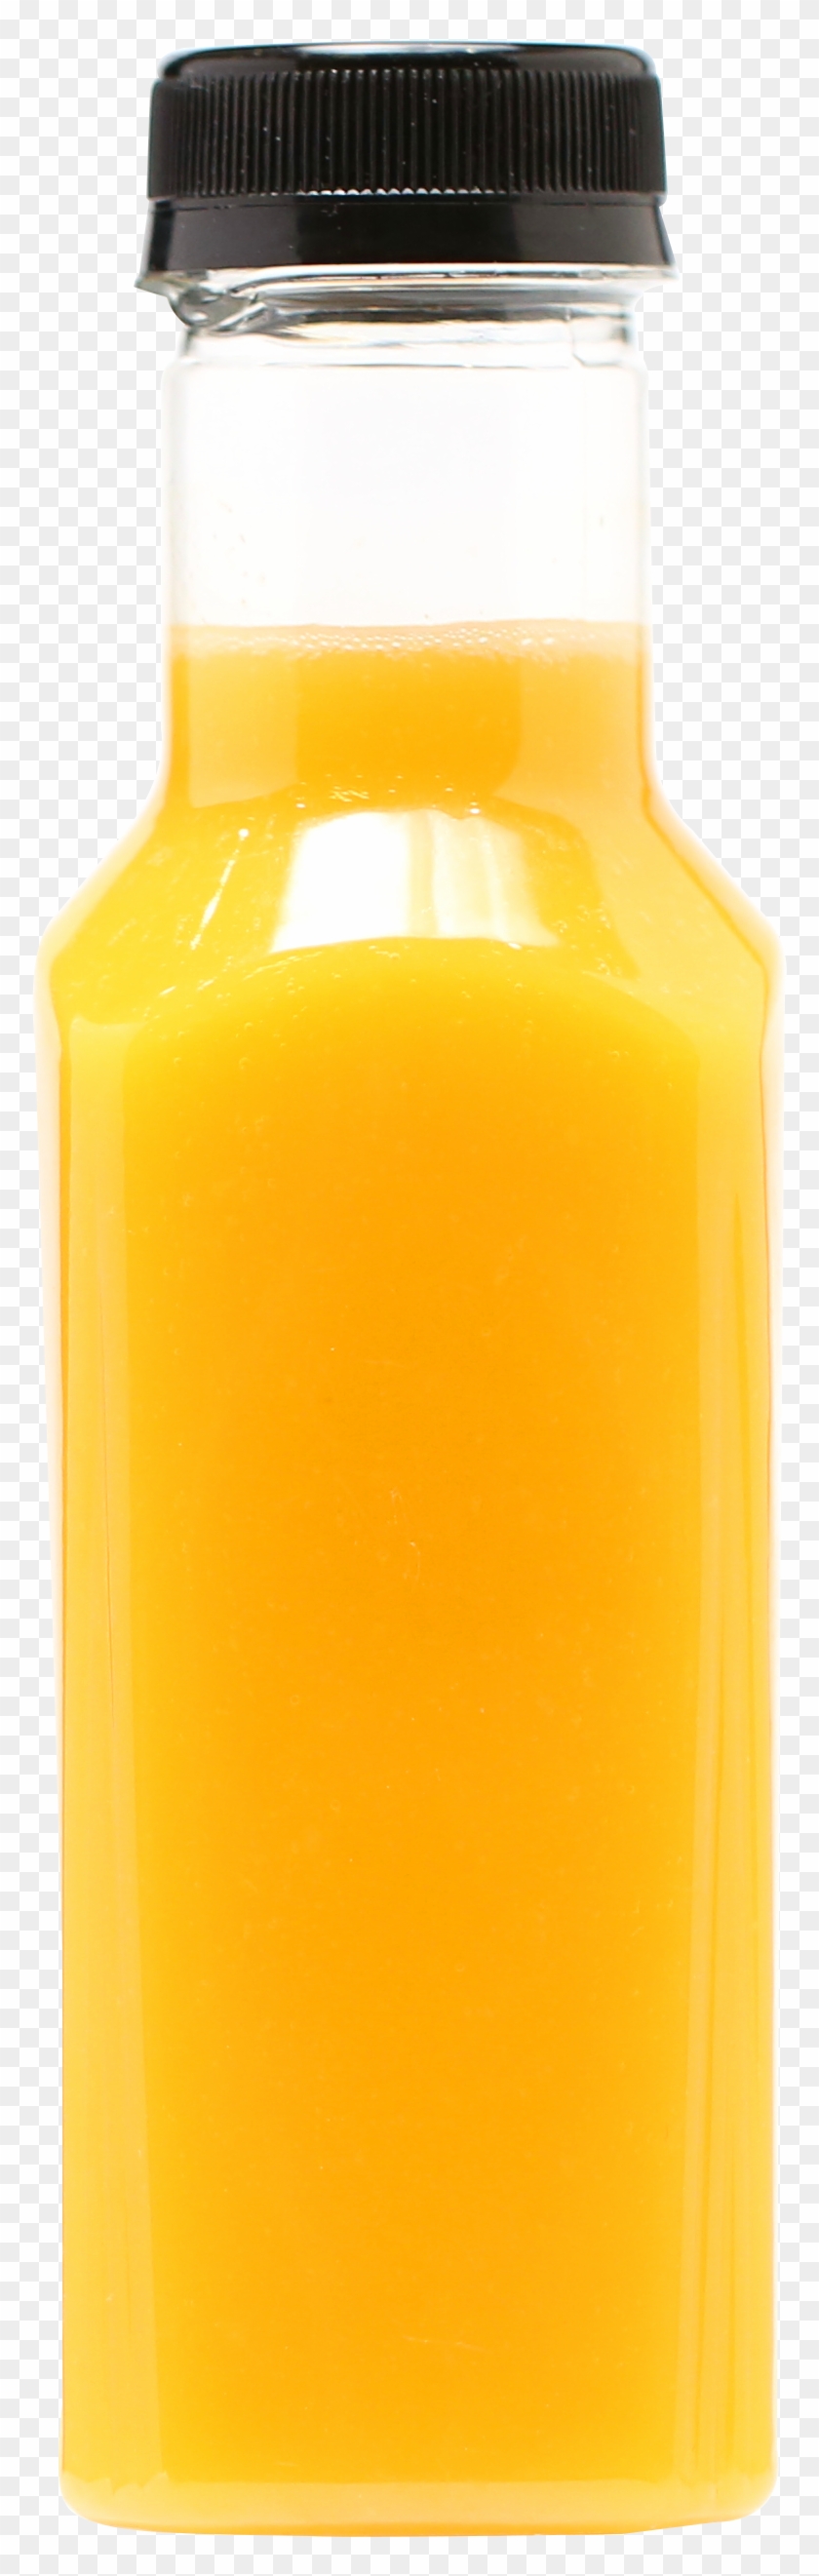 Orange Juice Orange Drink Glass Bottle Liquid - Vegetable Juice #482026